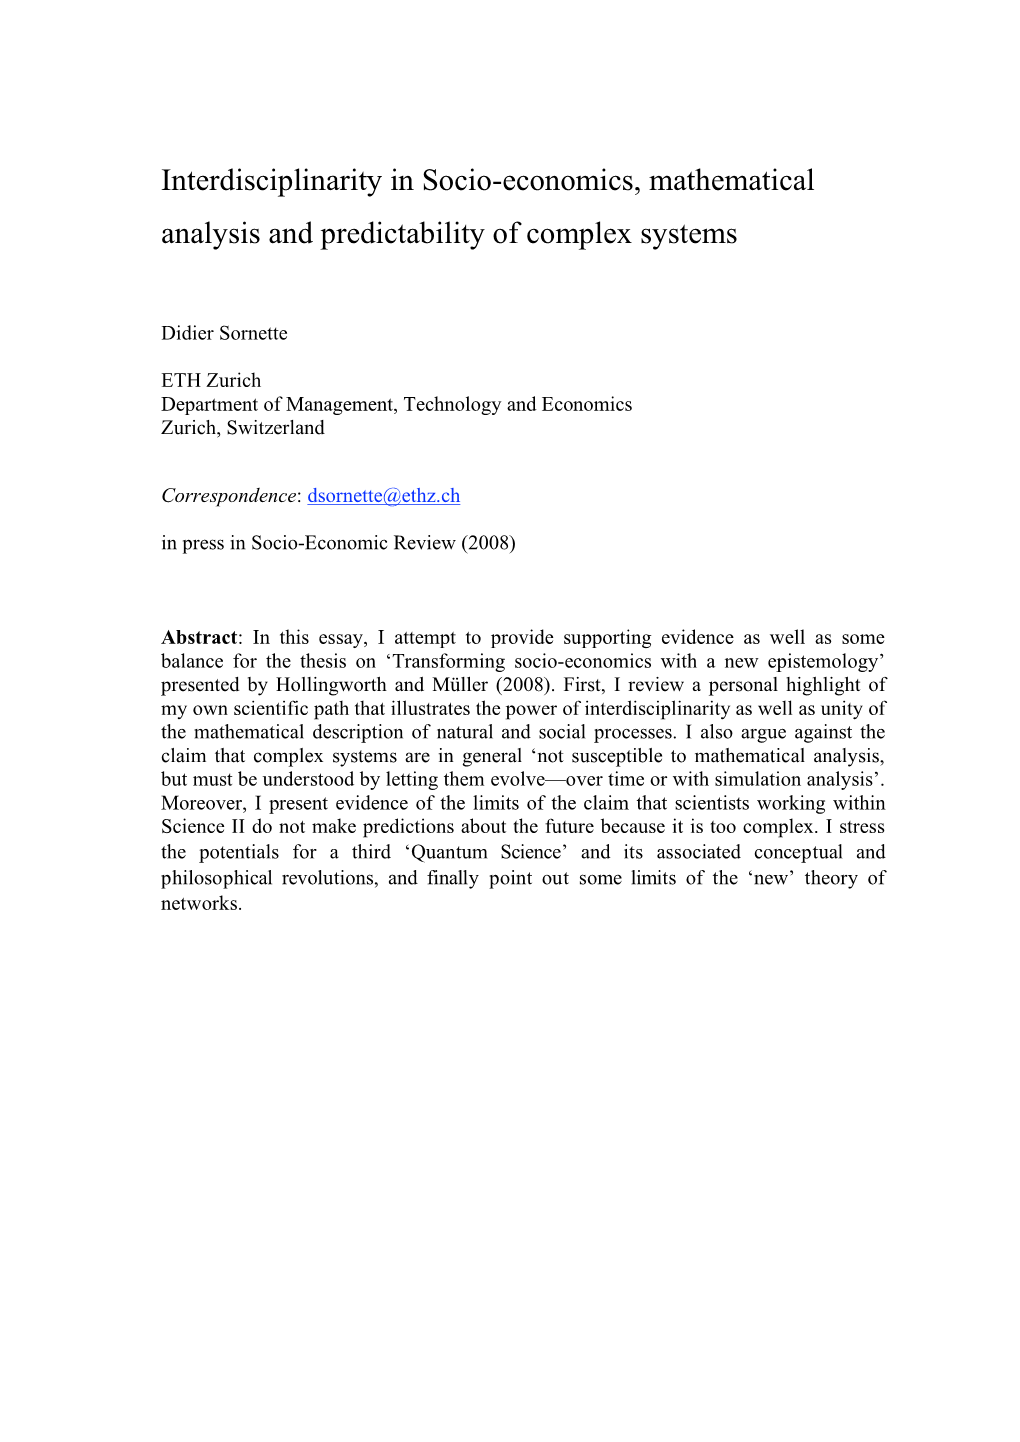 Interdisciplinarity in Socio-Economics, Mathematical Analysis and Predictability of Complex Systems